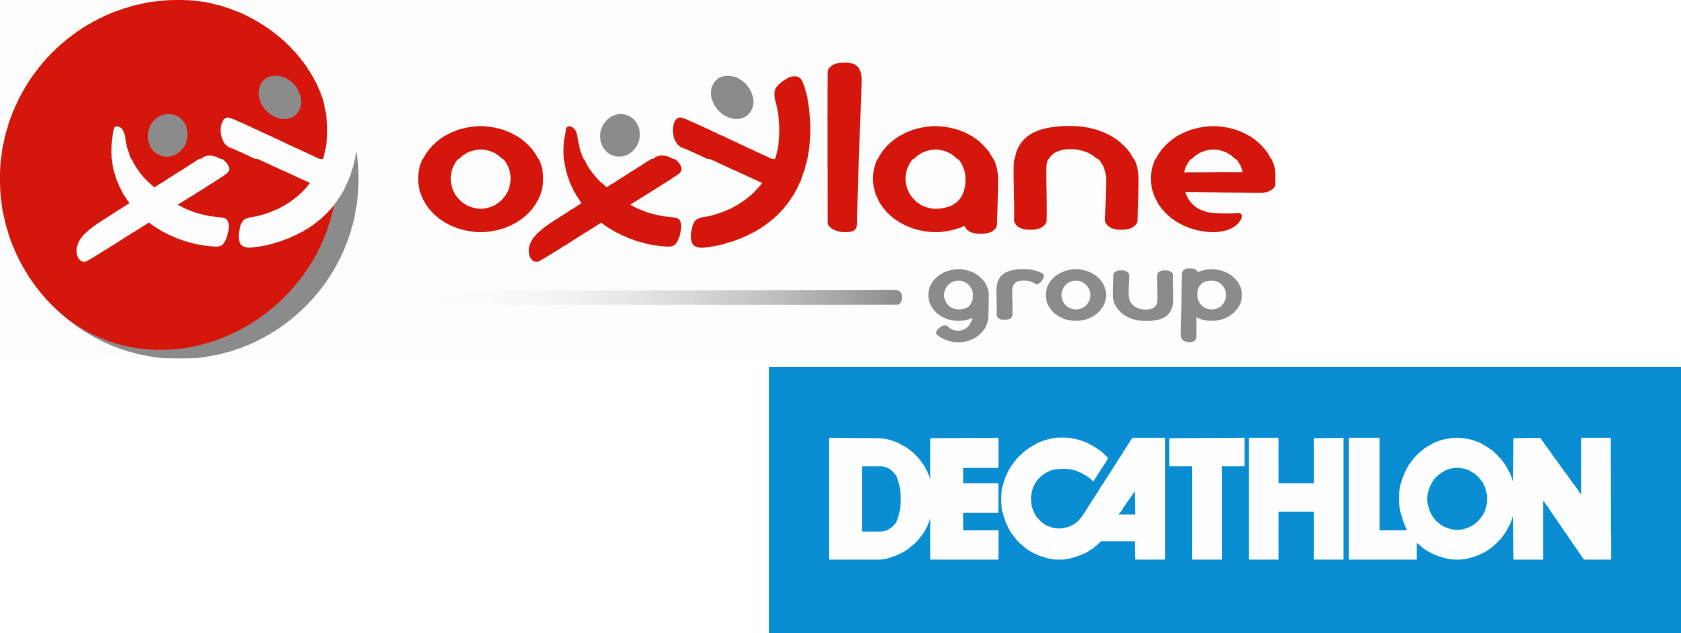 logo-oxylane-decathlon.jpg